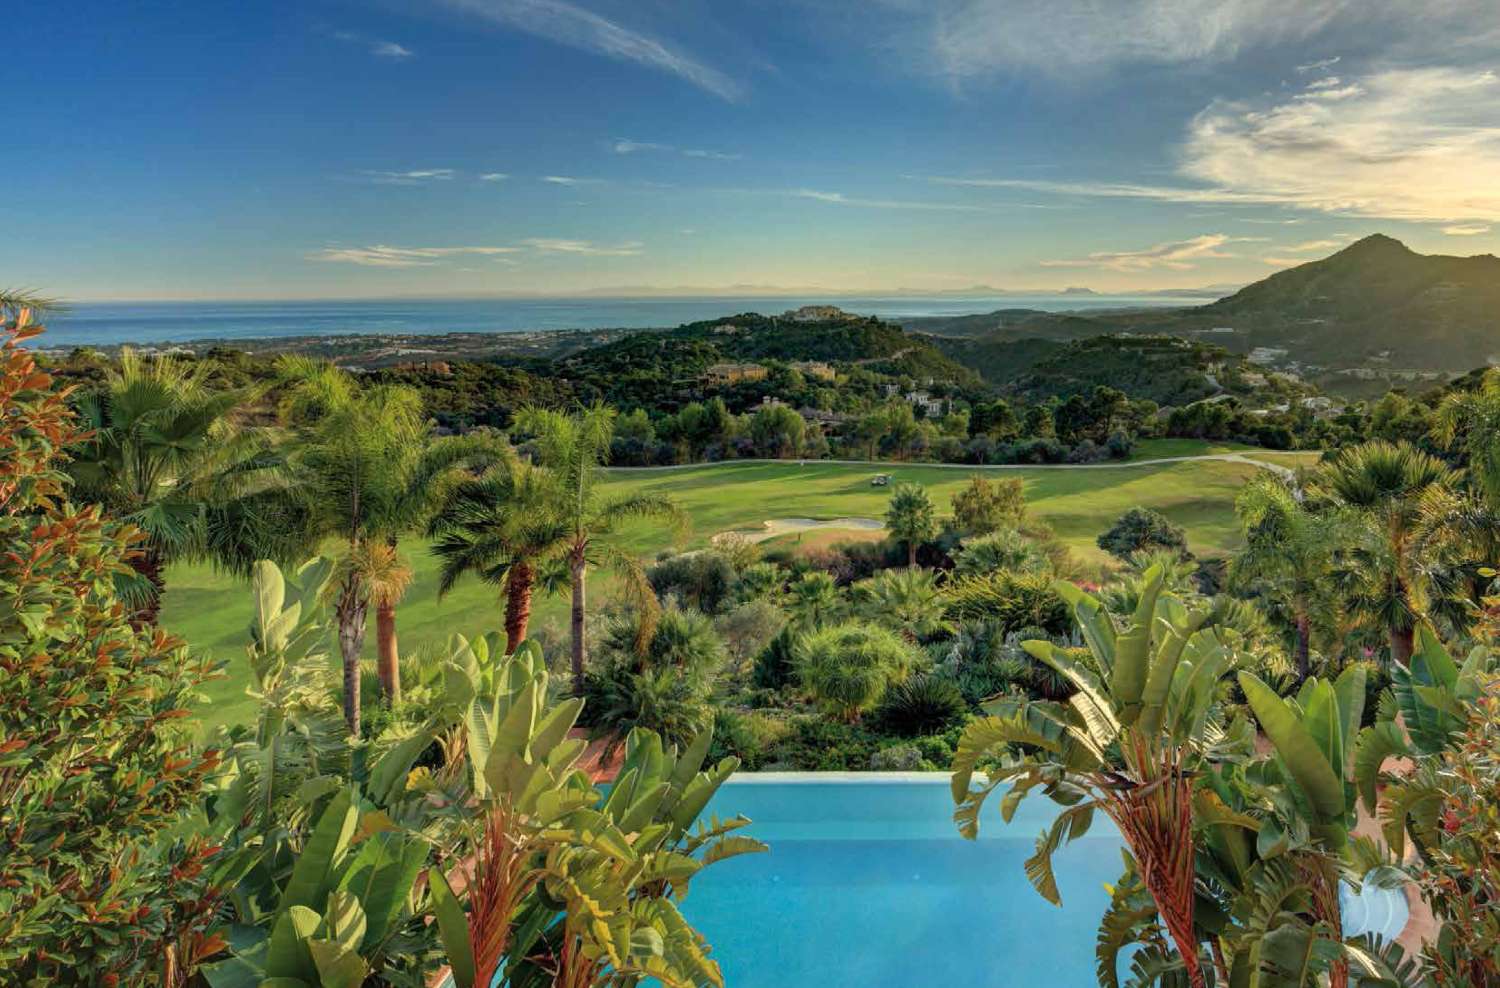 Til salg, villa i La Zagaleta, Benahavis. Frontline Golf med panoramaudsigt over havet.